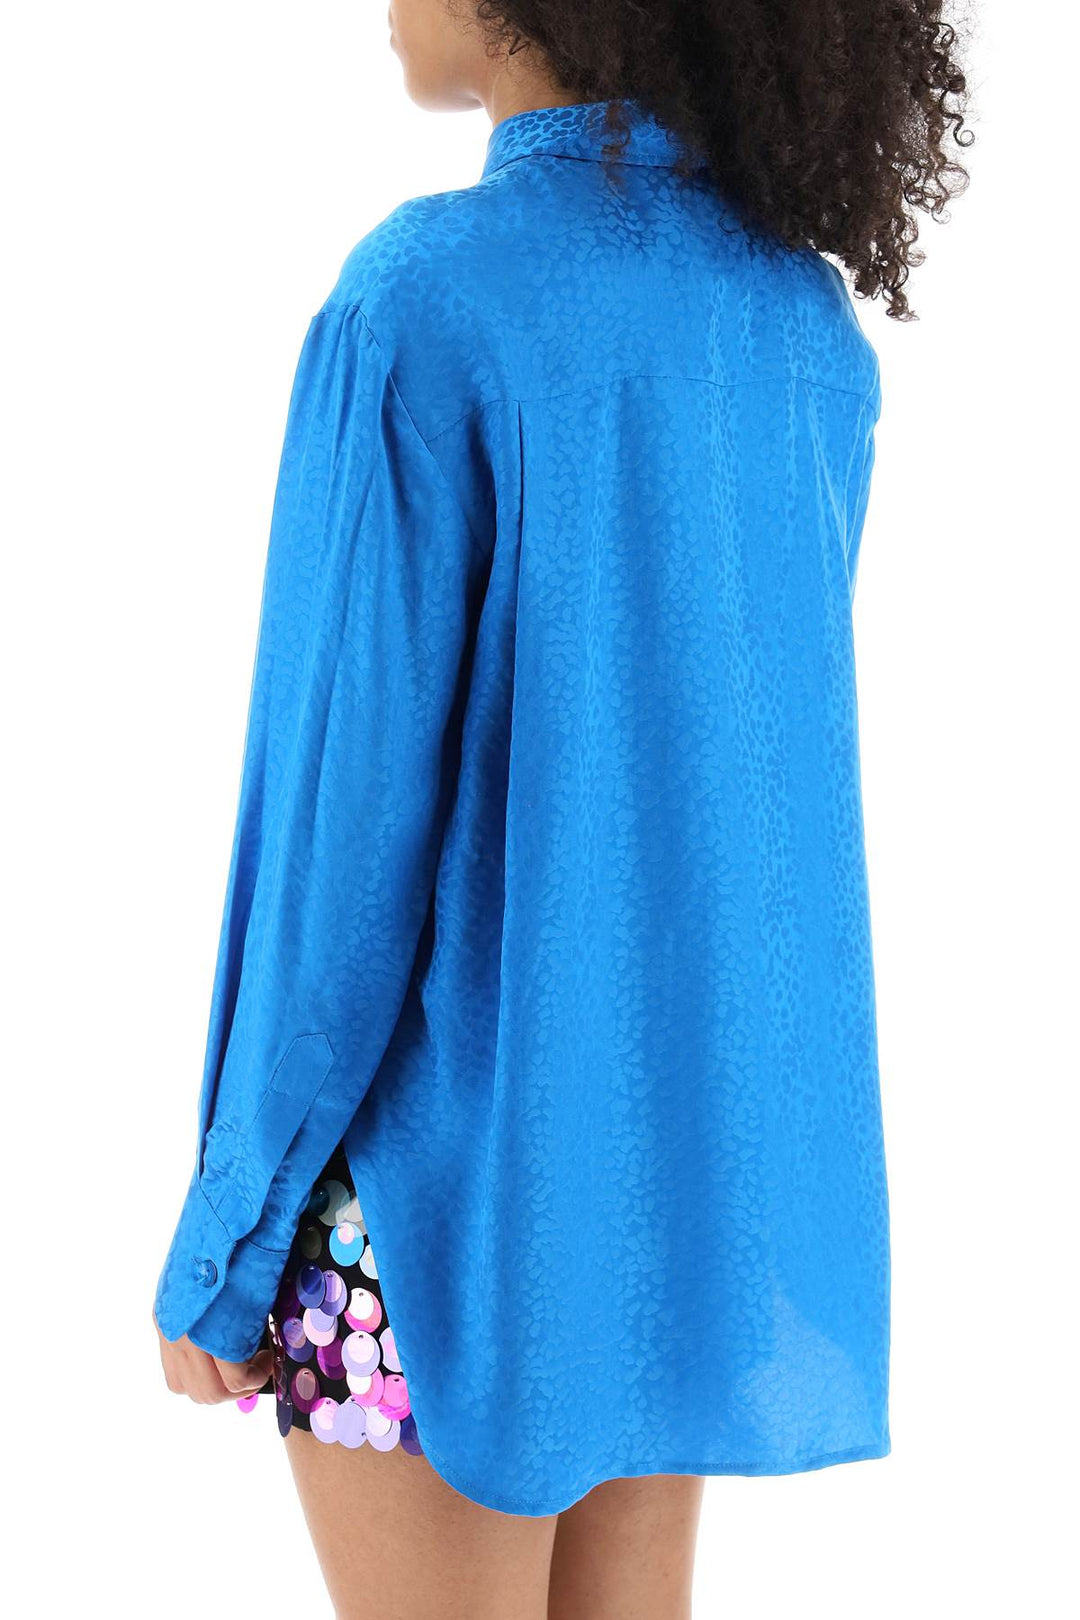 Art Dealer Charlie Shirt In Jacquard Silk   Blu